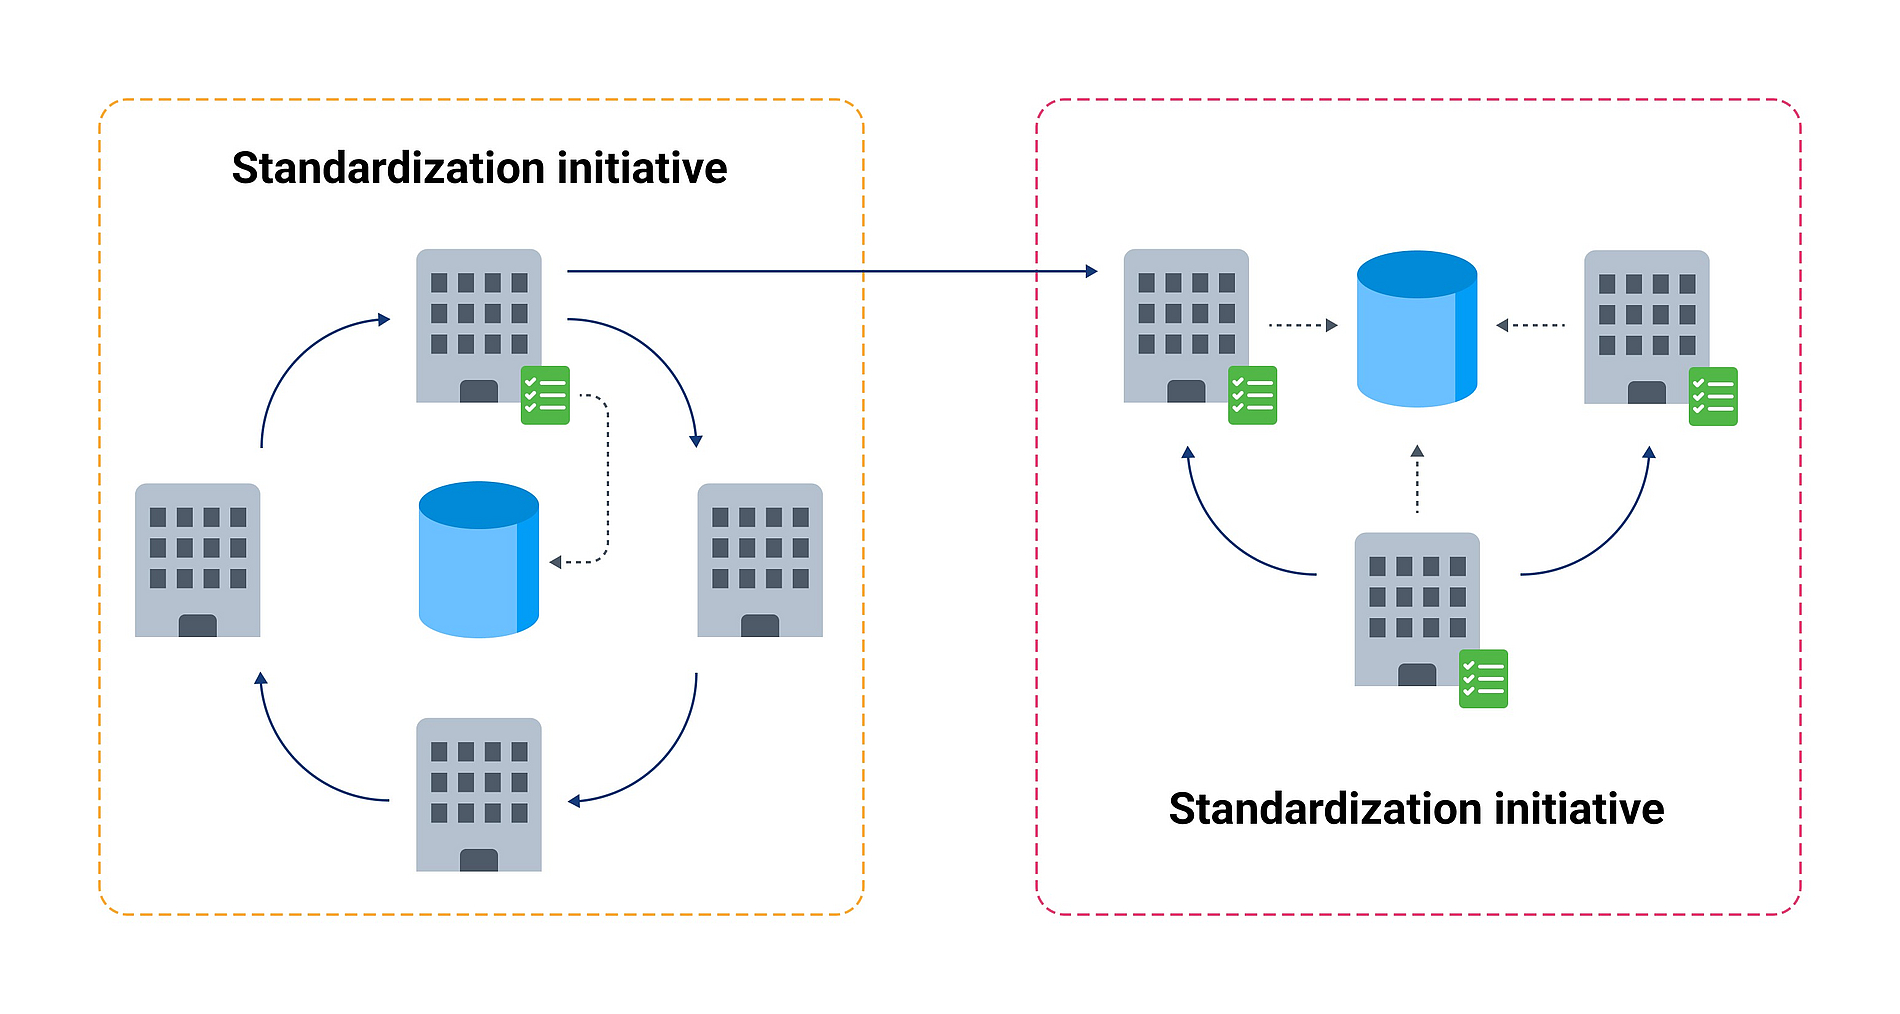 Standardization initiative